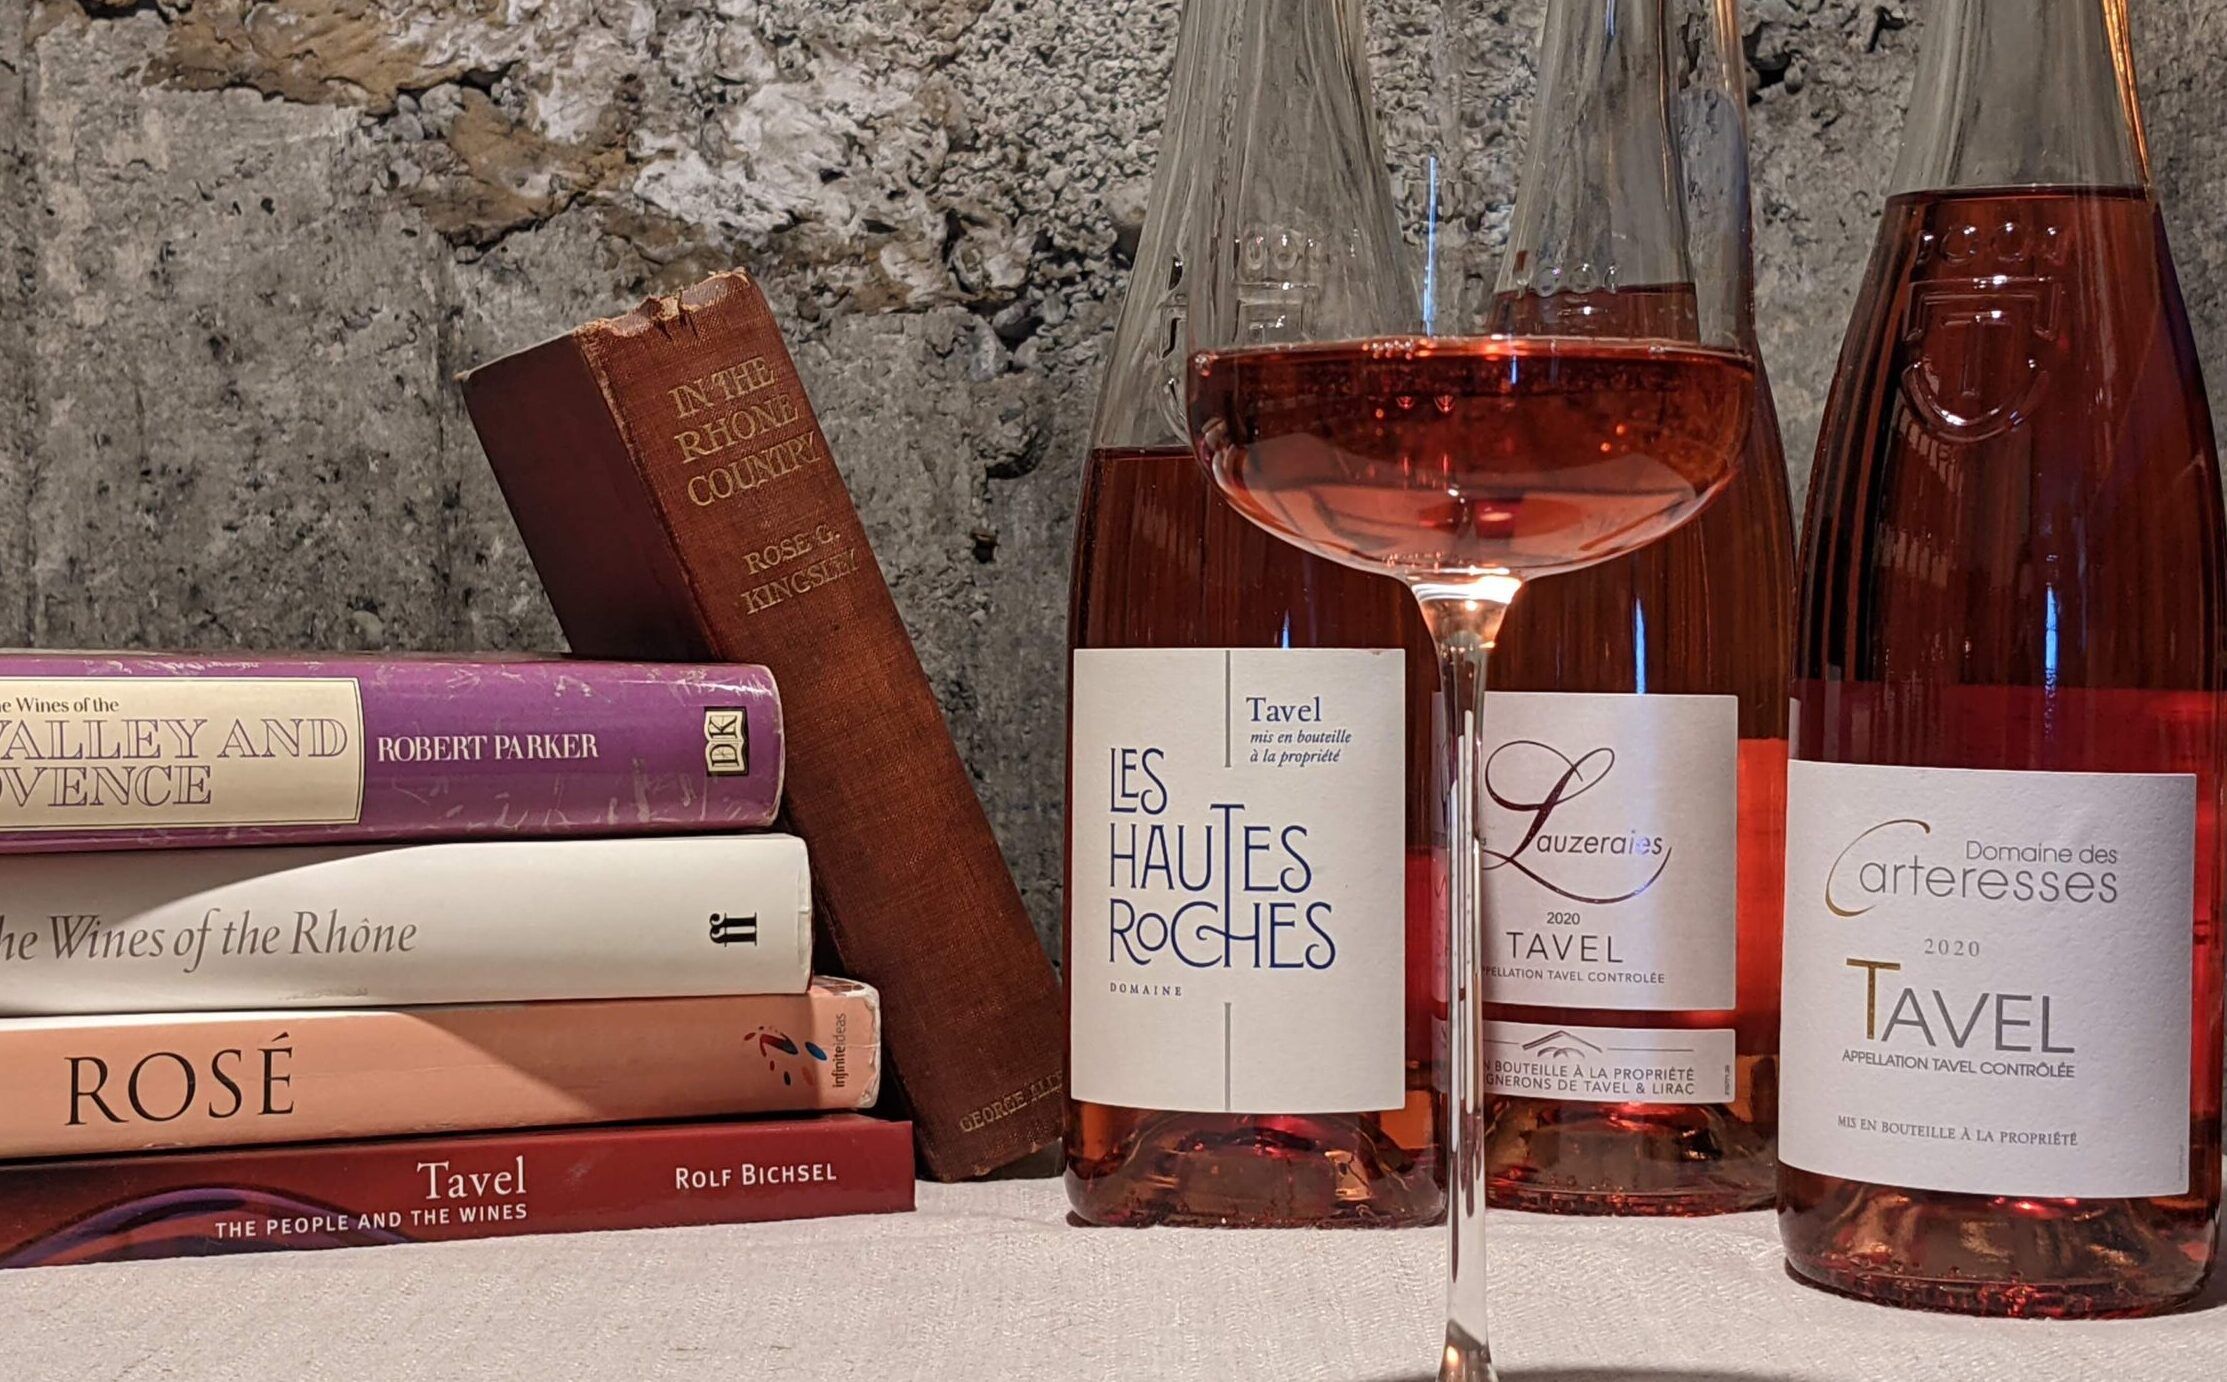 Elizabeth Gabay MW on what makes Tavel rosé so different